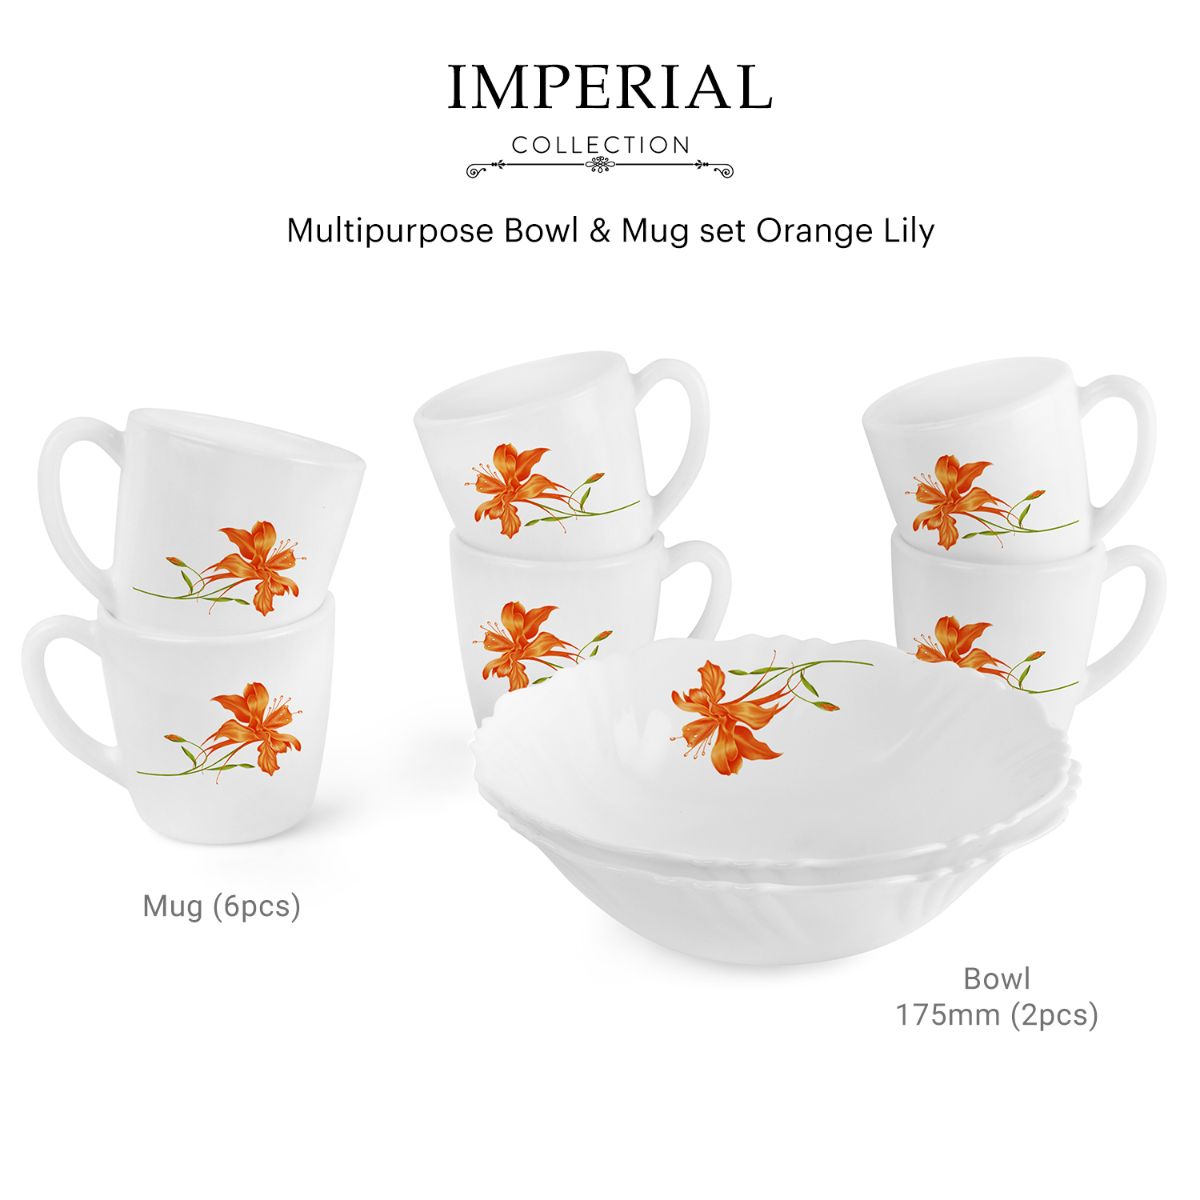 Imperial Series Quick Bite Bowl & Mug Gift set, 8 Pieces Orange Lily / 8 Pieces